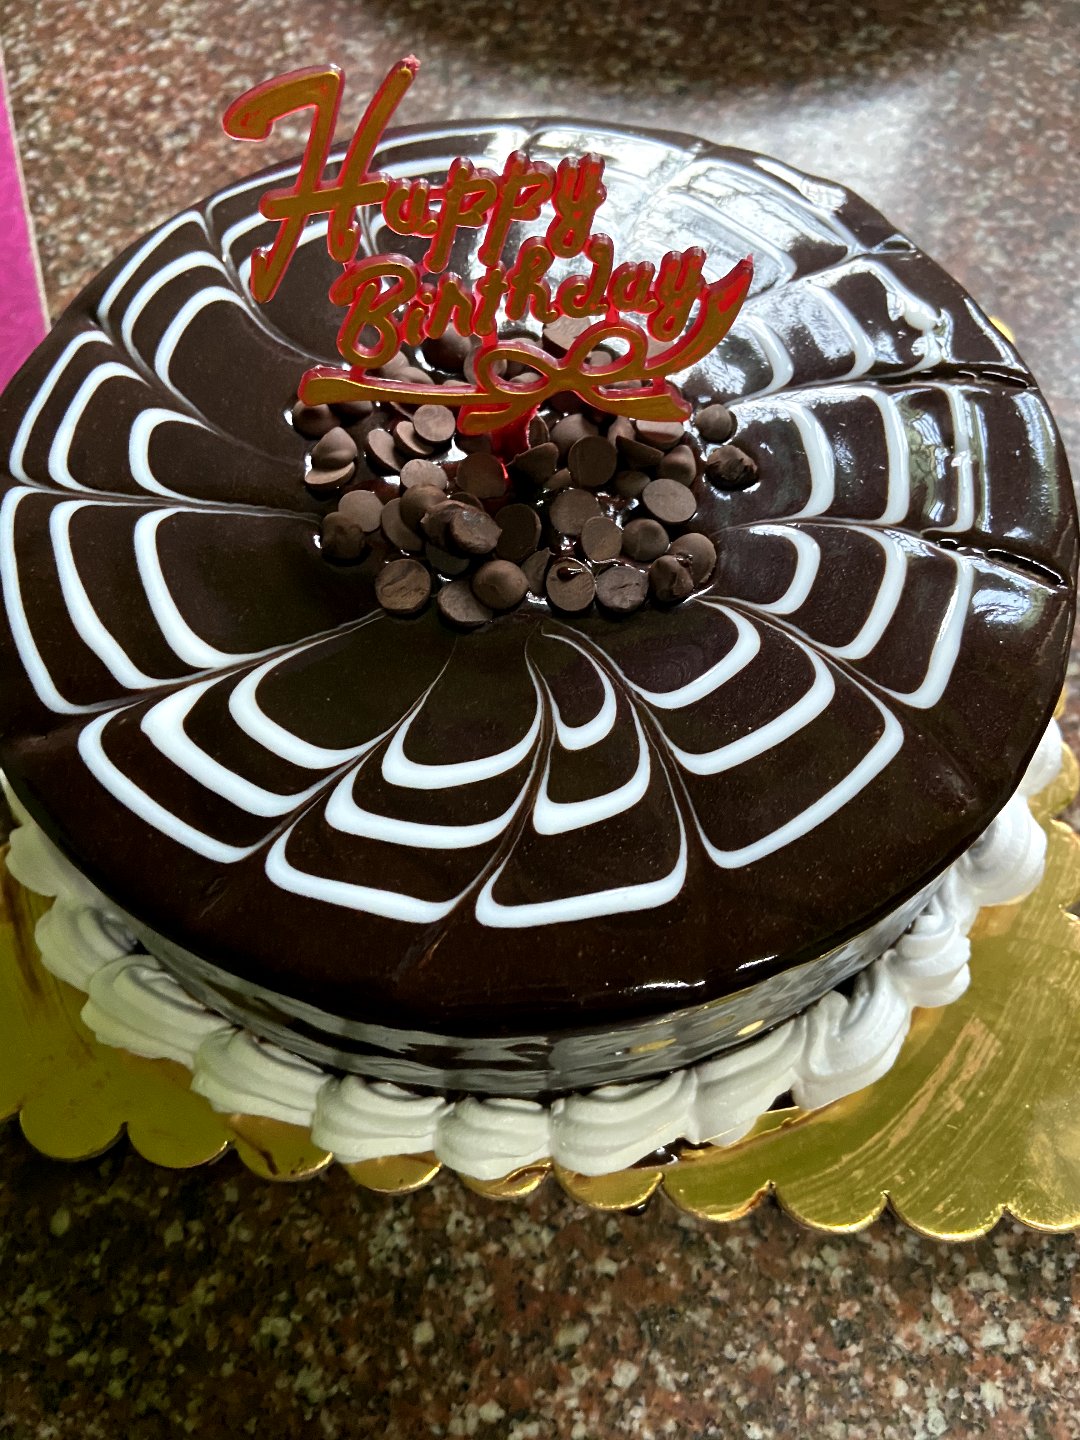 Spider Web Design Chocolate Cake - 2Pound